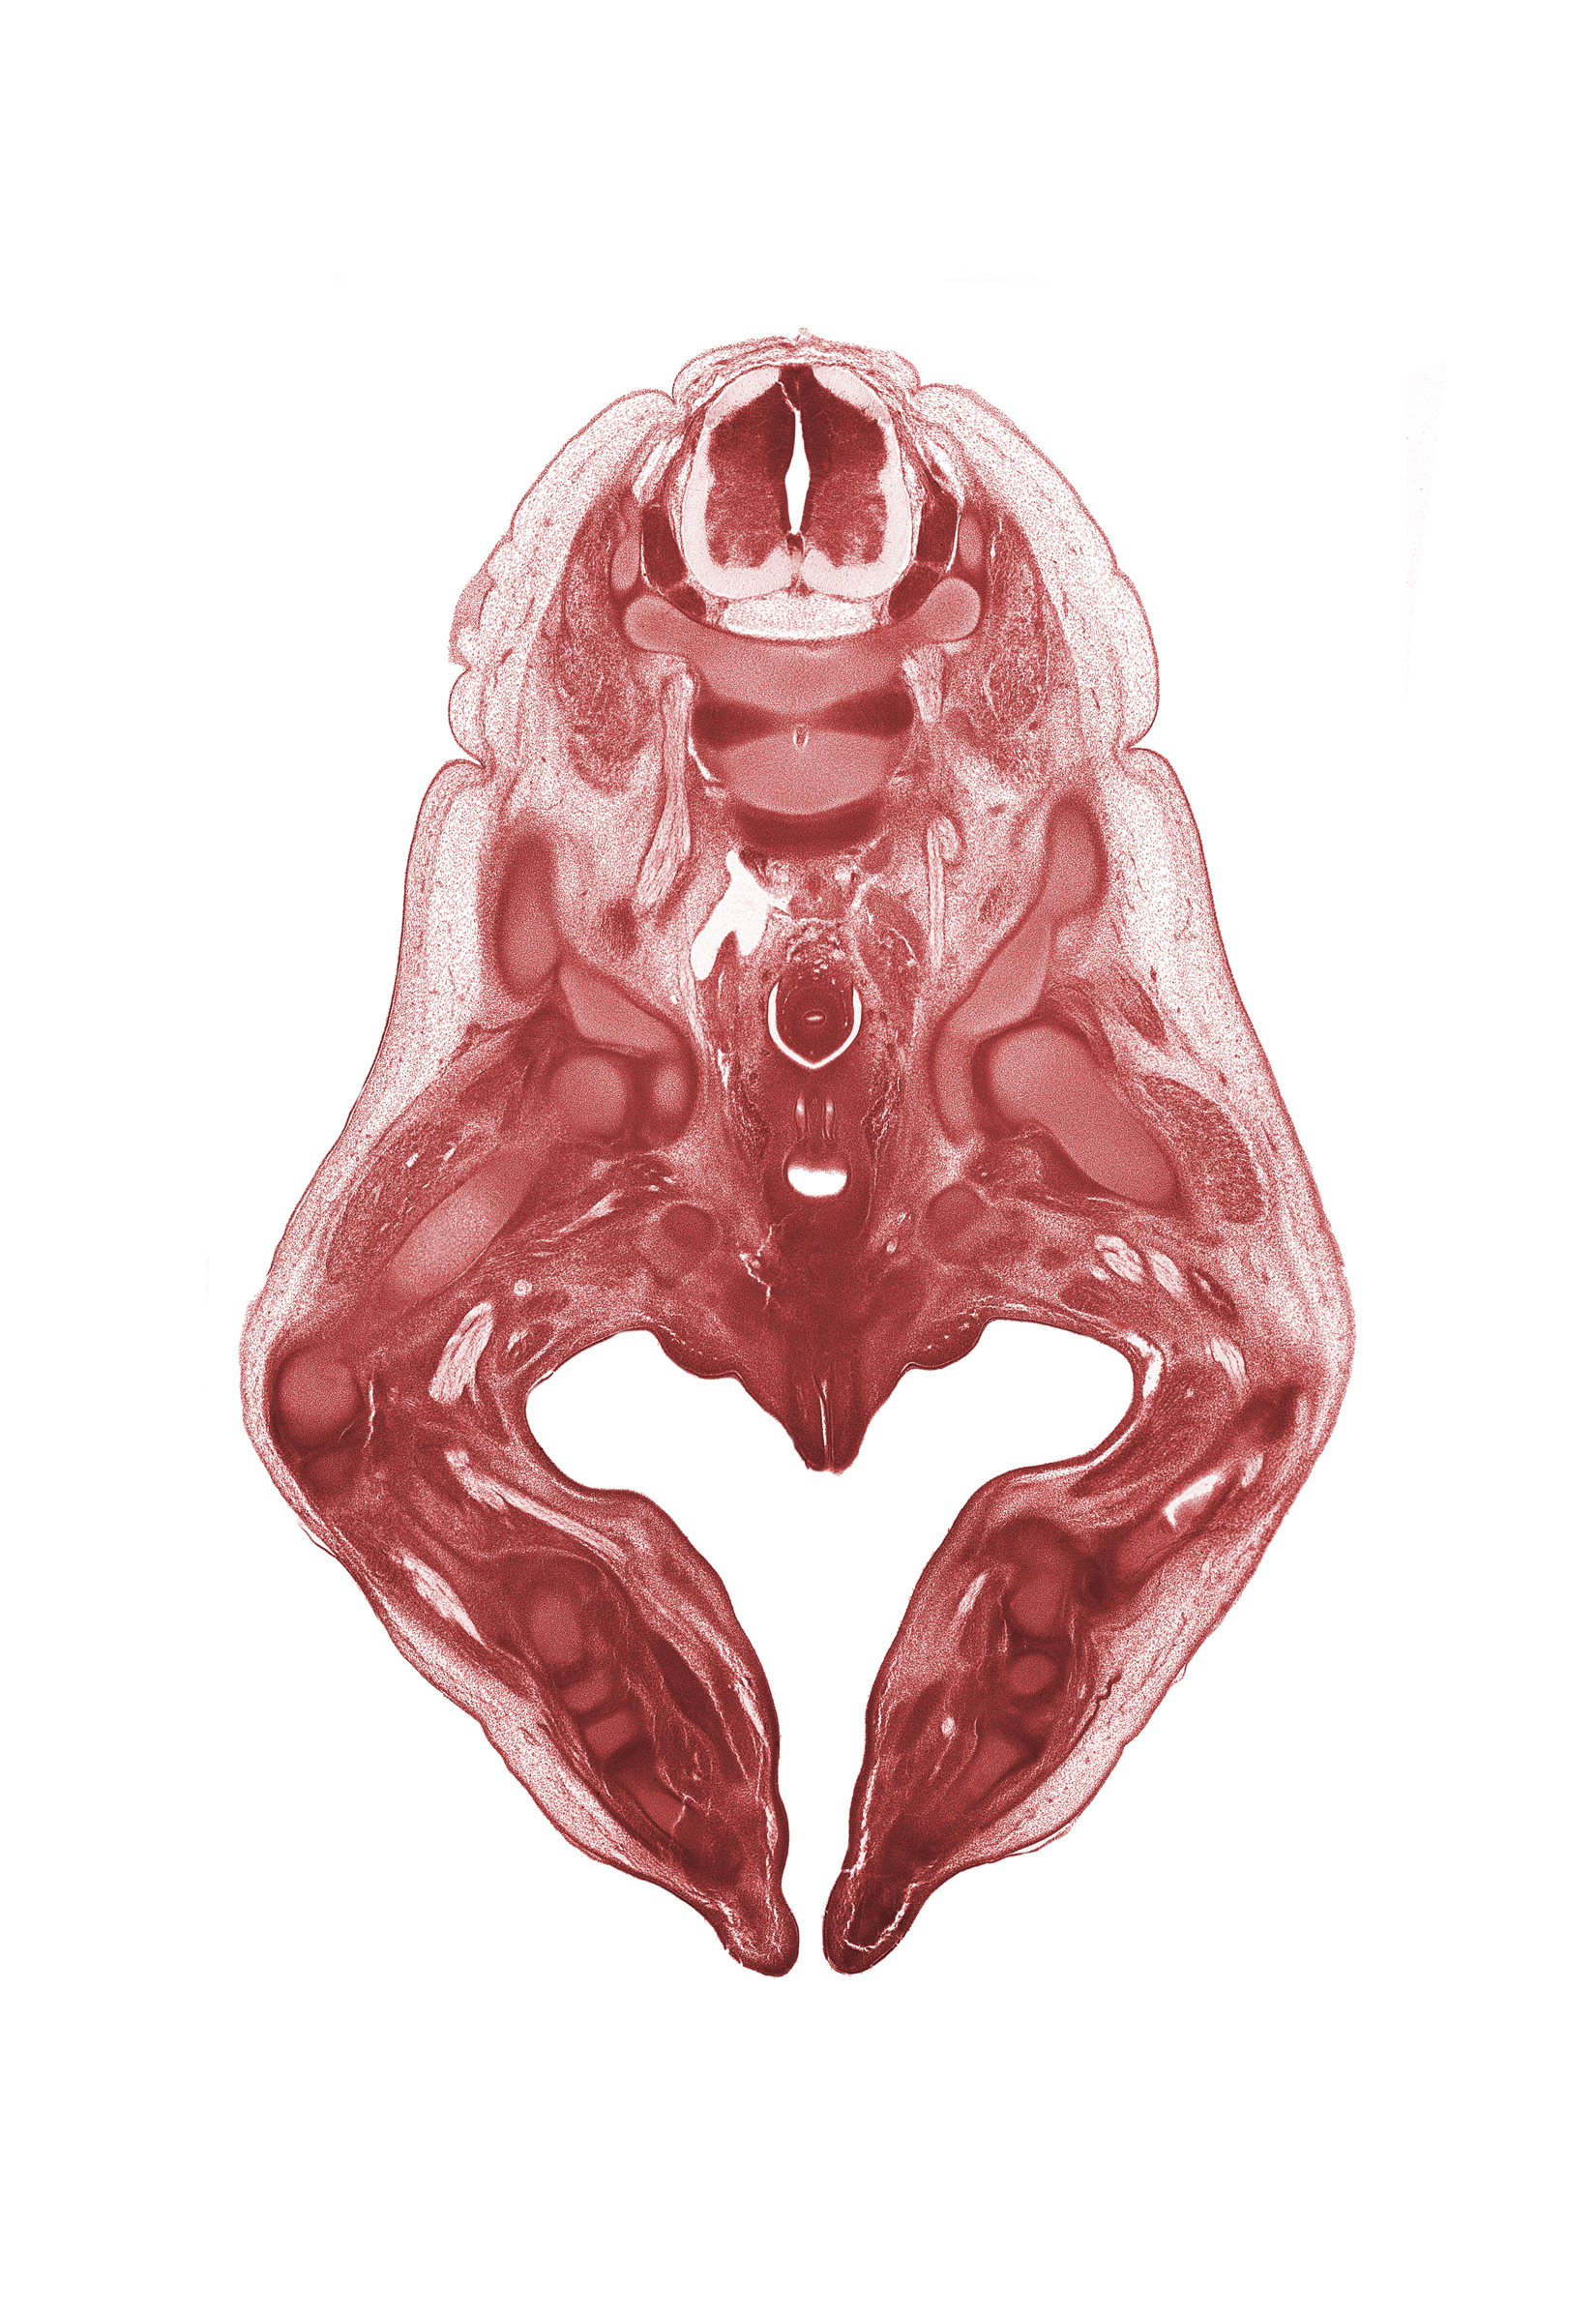 L-2 spinal ganglion, L-3 / L-4 intervertebral disc, L-3 spinal ganglion, femoral artery, hip joint, iliac crest, labial swelling (labium major), labium minor, lumbar plexus, neural arch, paramesonephric duct, peritoneal cavity, sciatic nerve, sympathetic trunk, tibial nerve, urinary bladder, vaginal vestibule